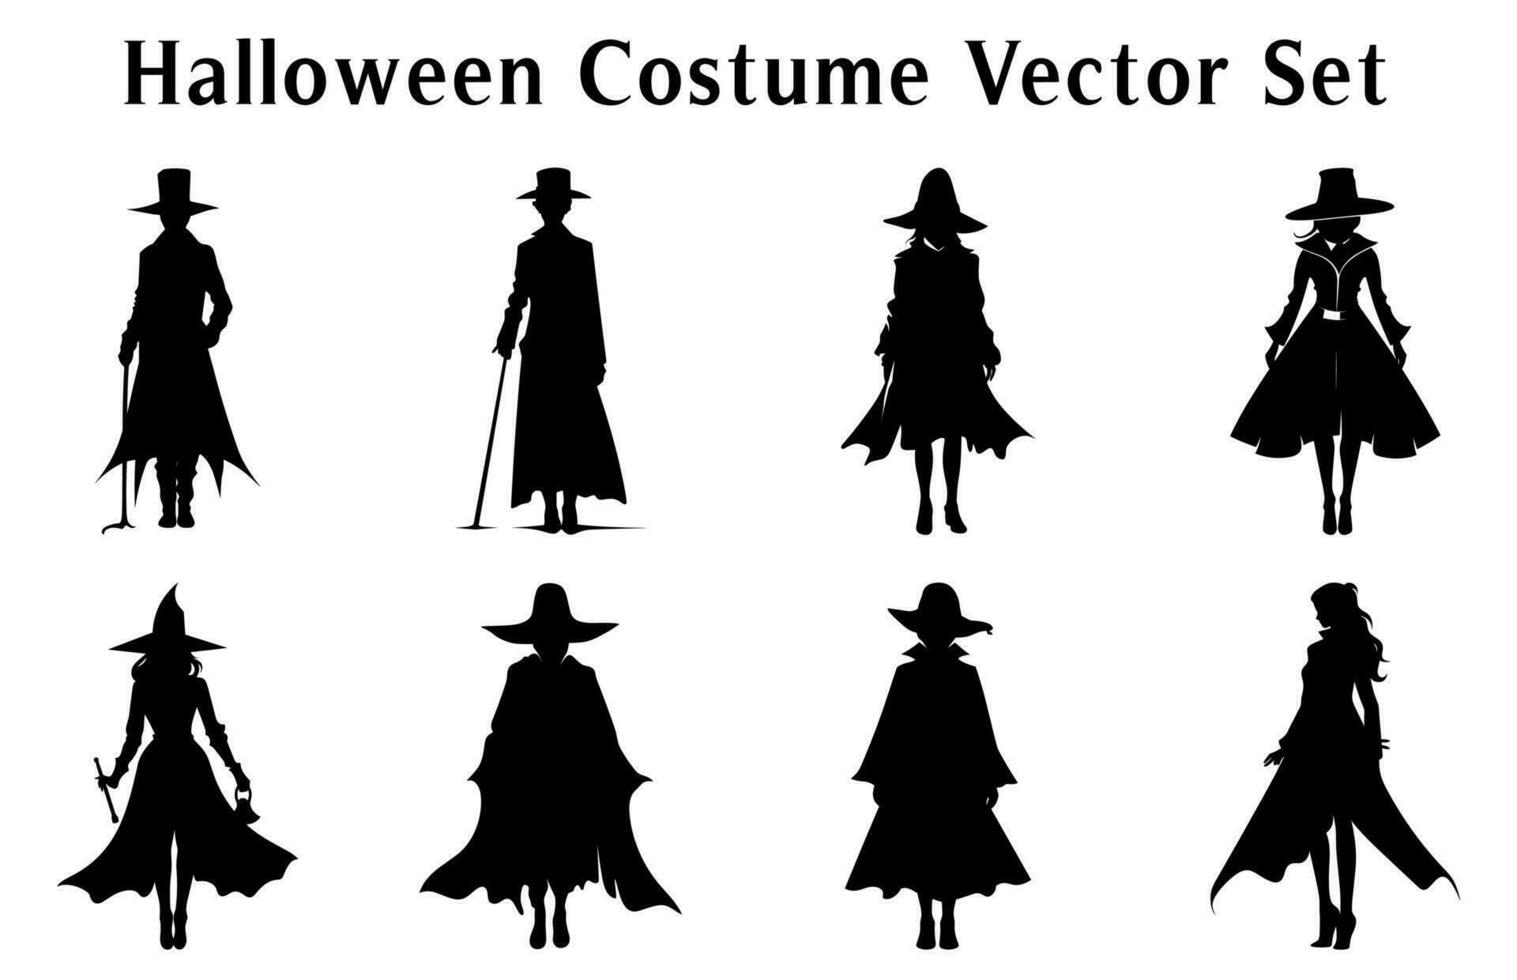 Halloween costume silhouette vecteur illustration